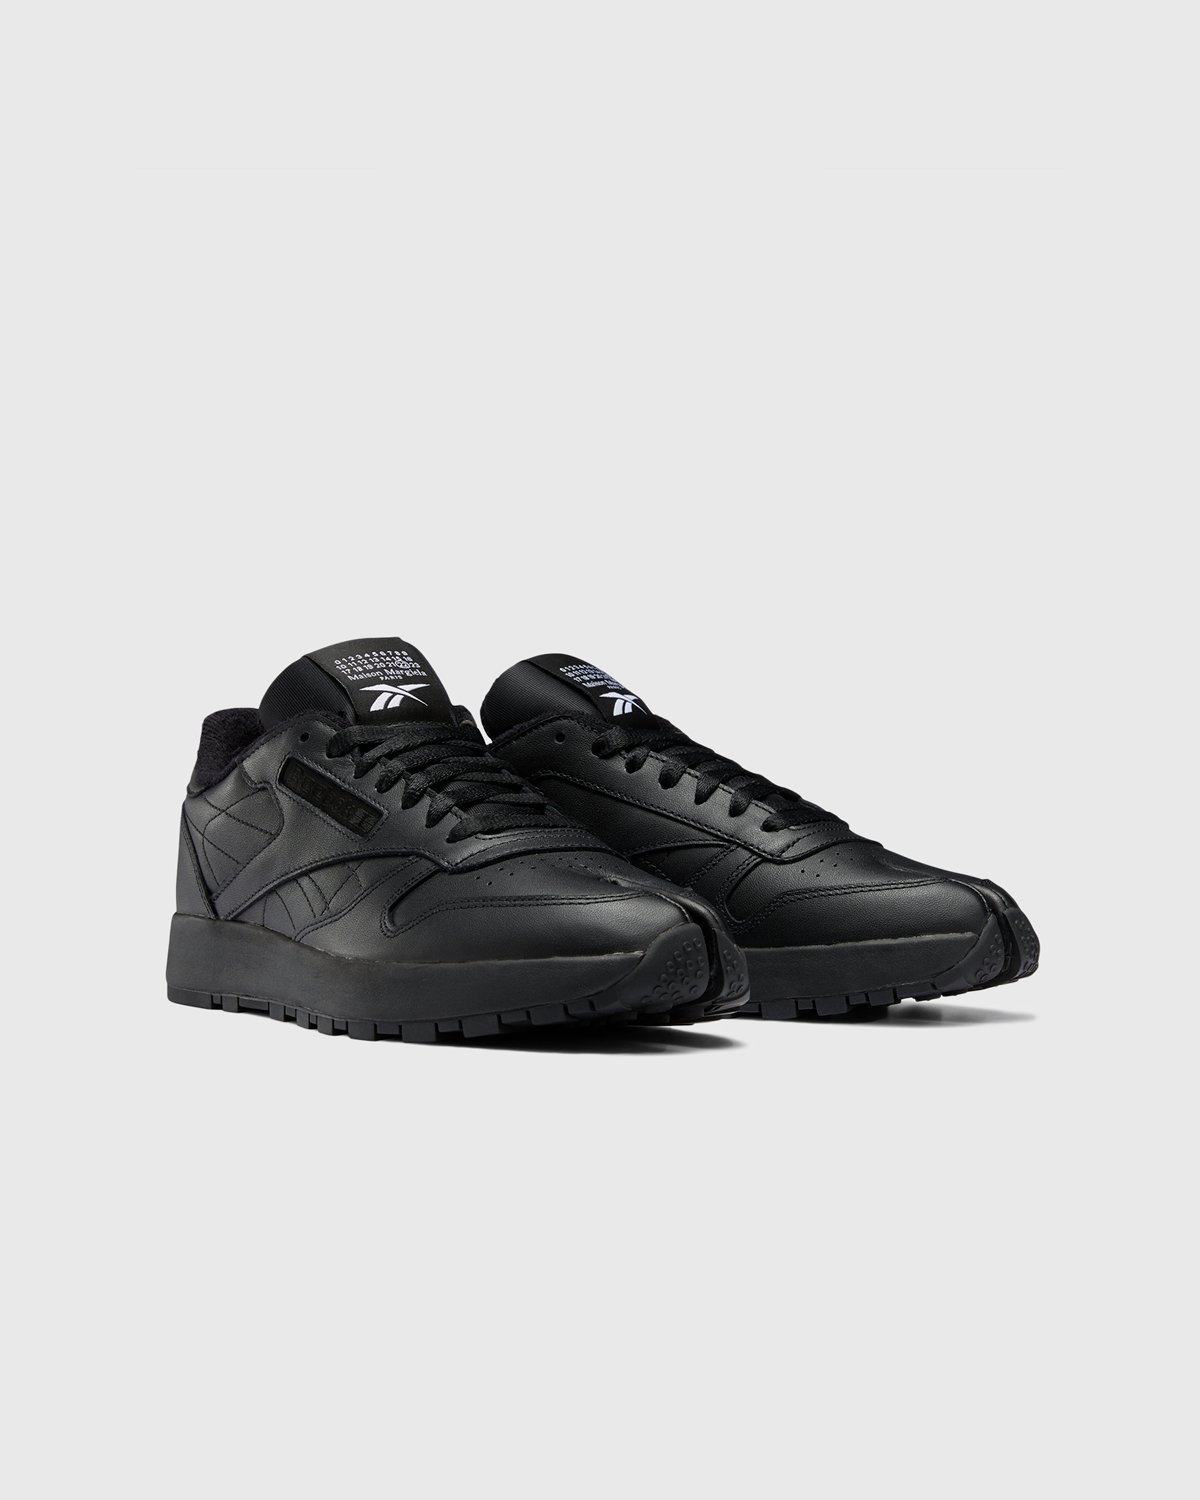 Maison Margiela x Reebok – Classic Leather Tabi Black - Low Top Sneakers - Black - Image 2